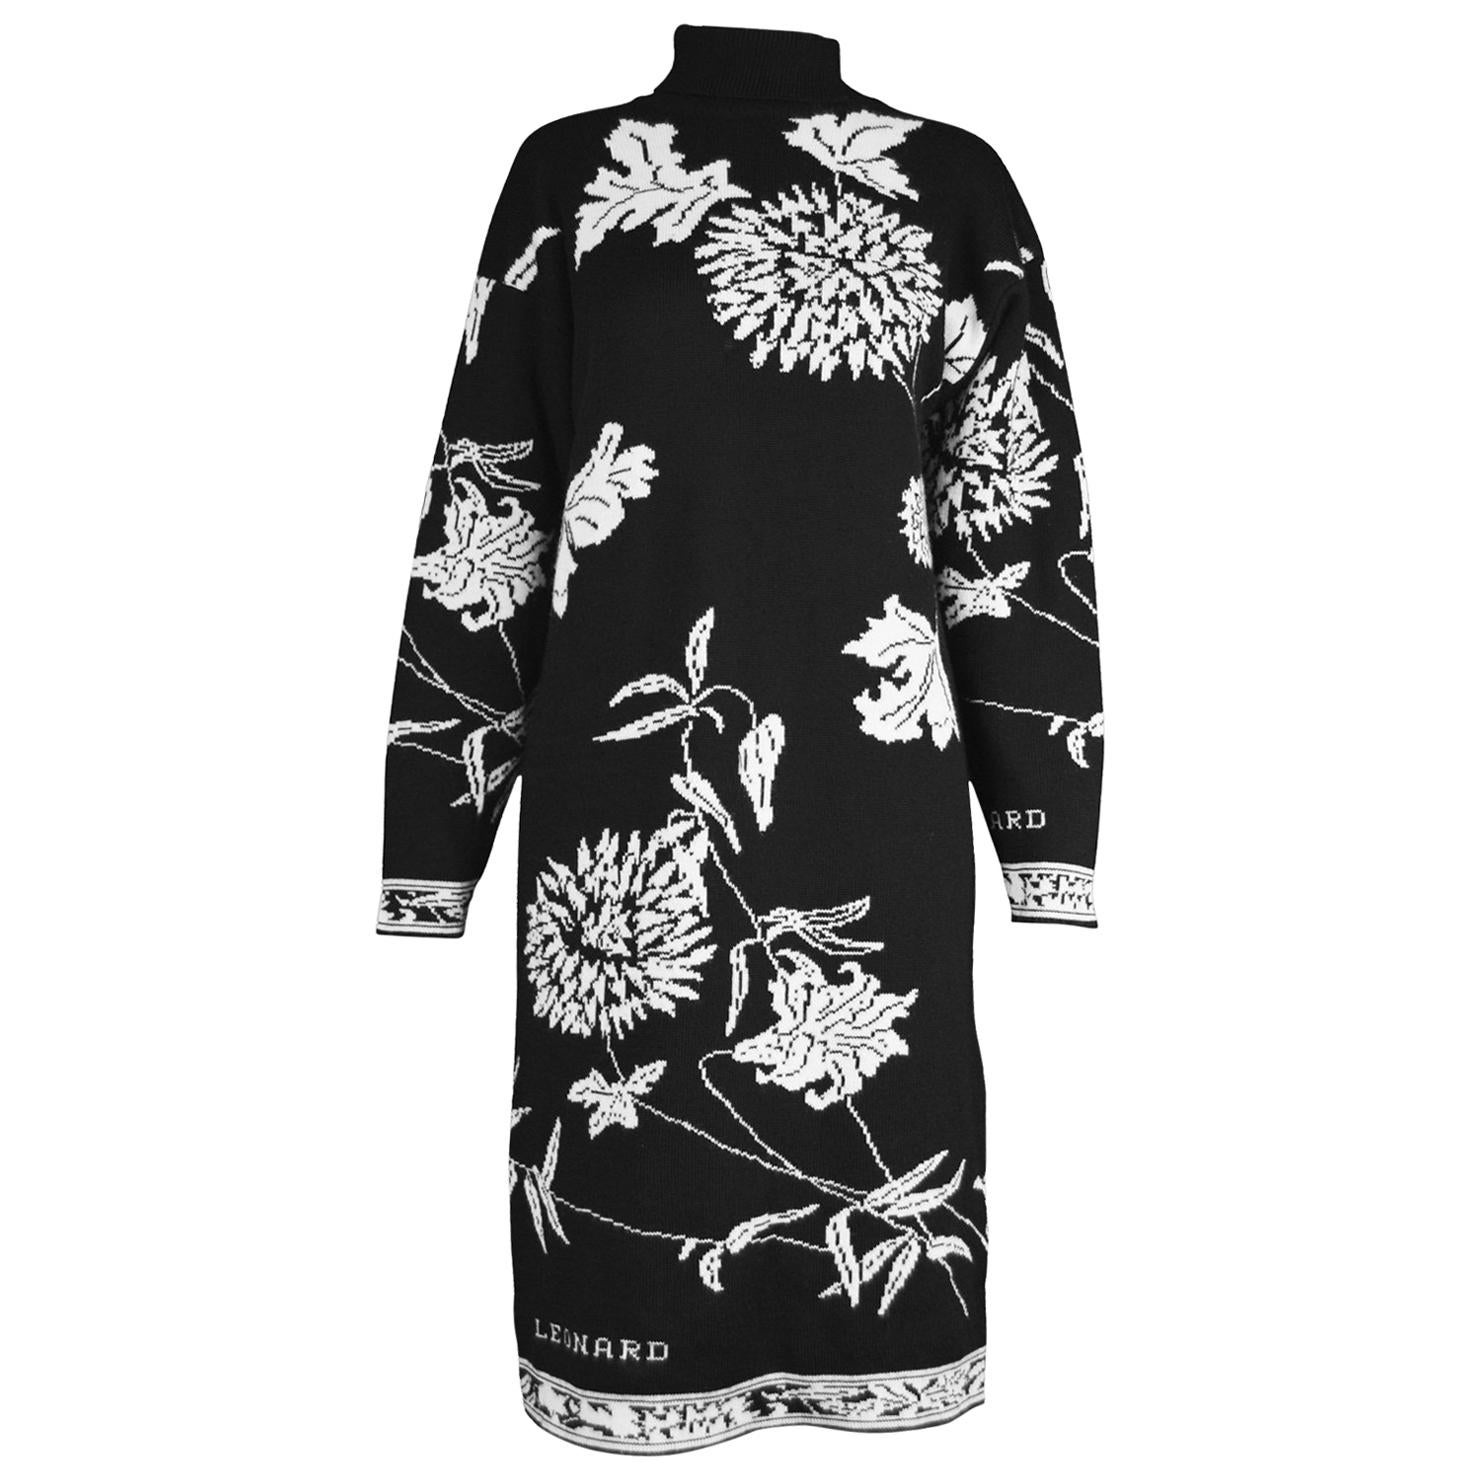 Leonard Paris Black & White Vintage Wool Blend Knit Sweater Dress, 1980s